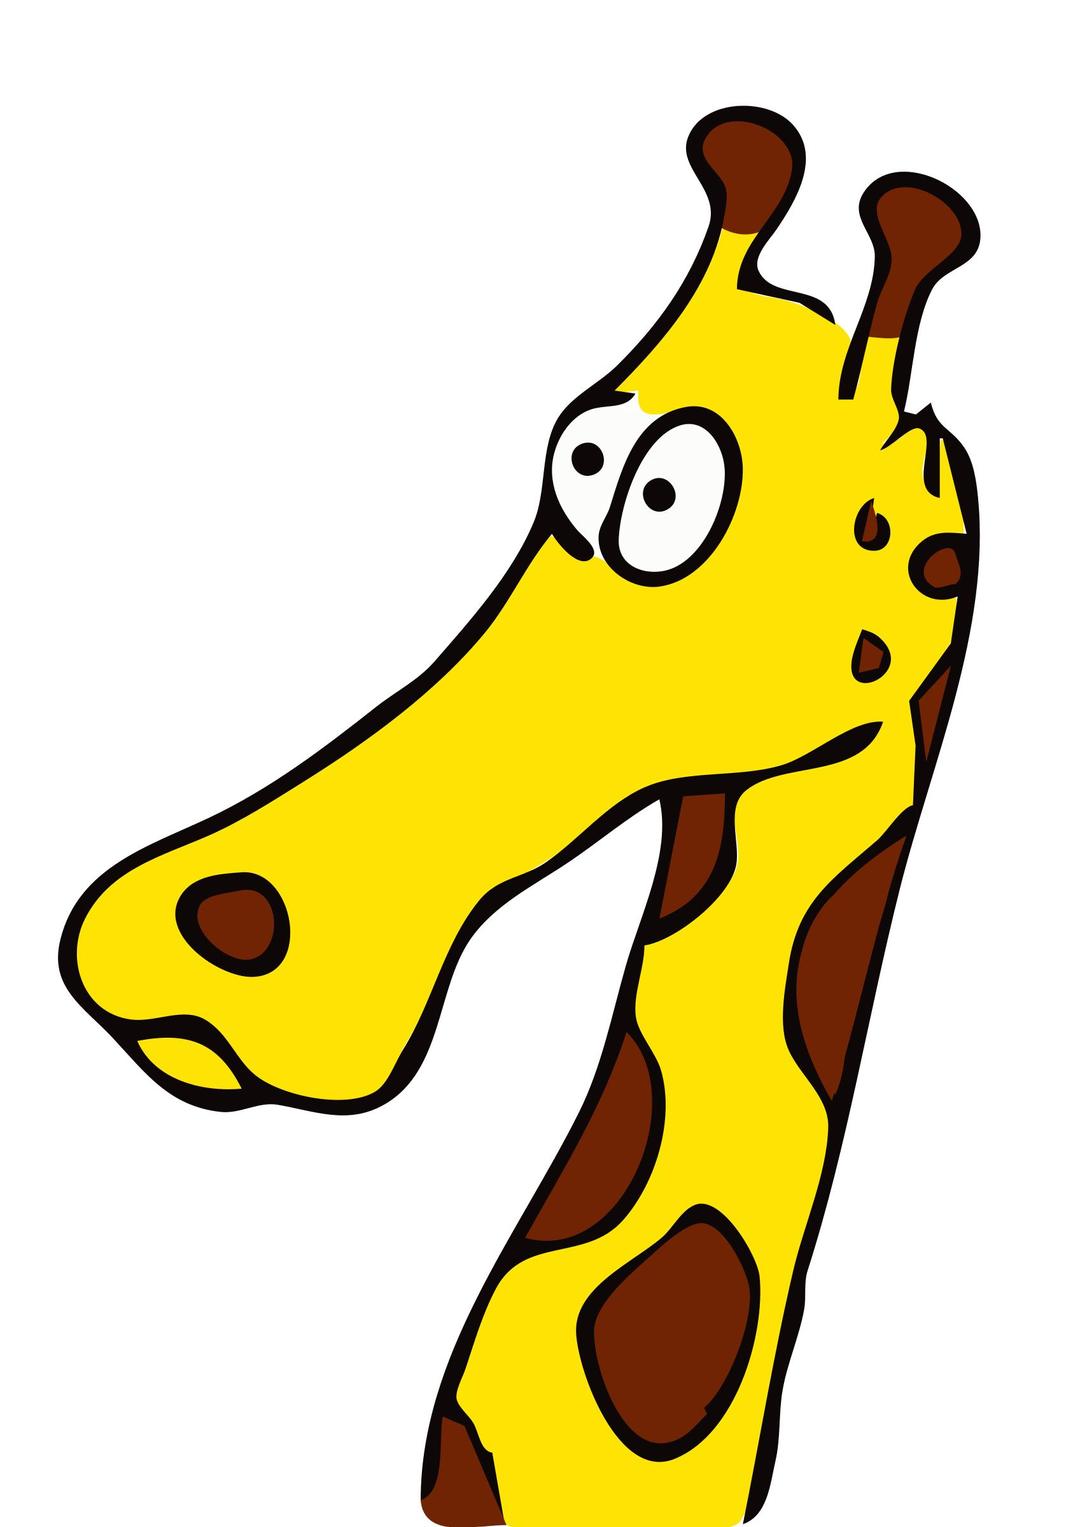 drawn giraffe png transparent